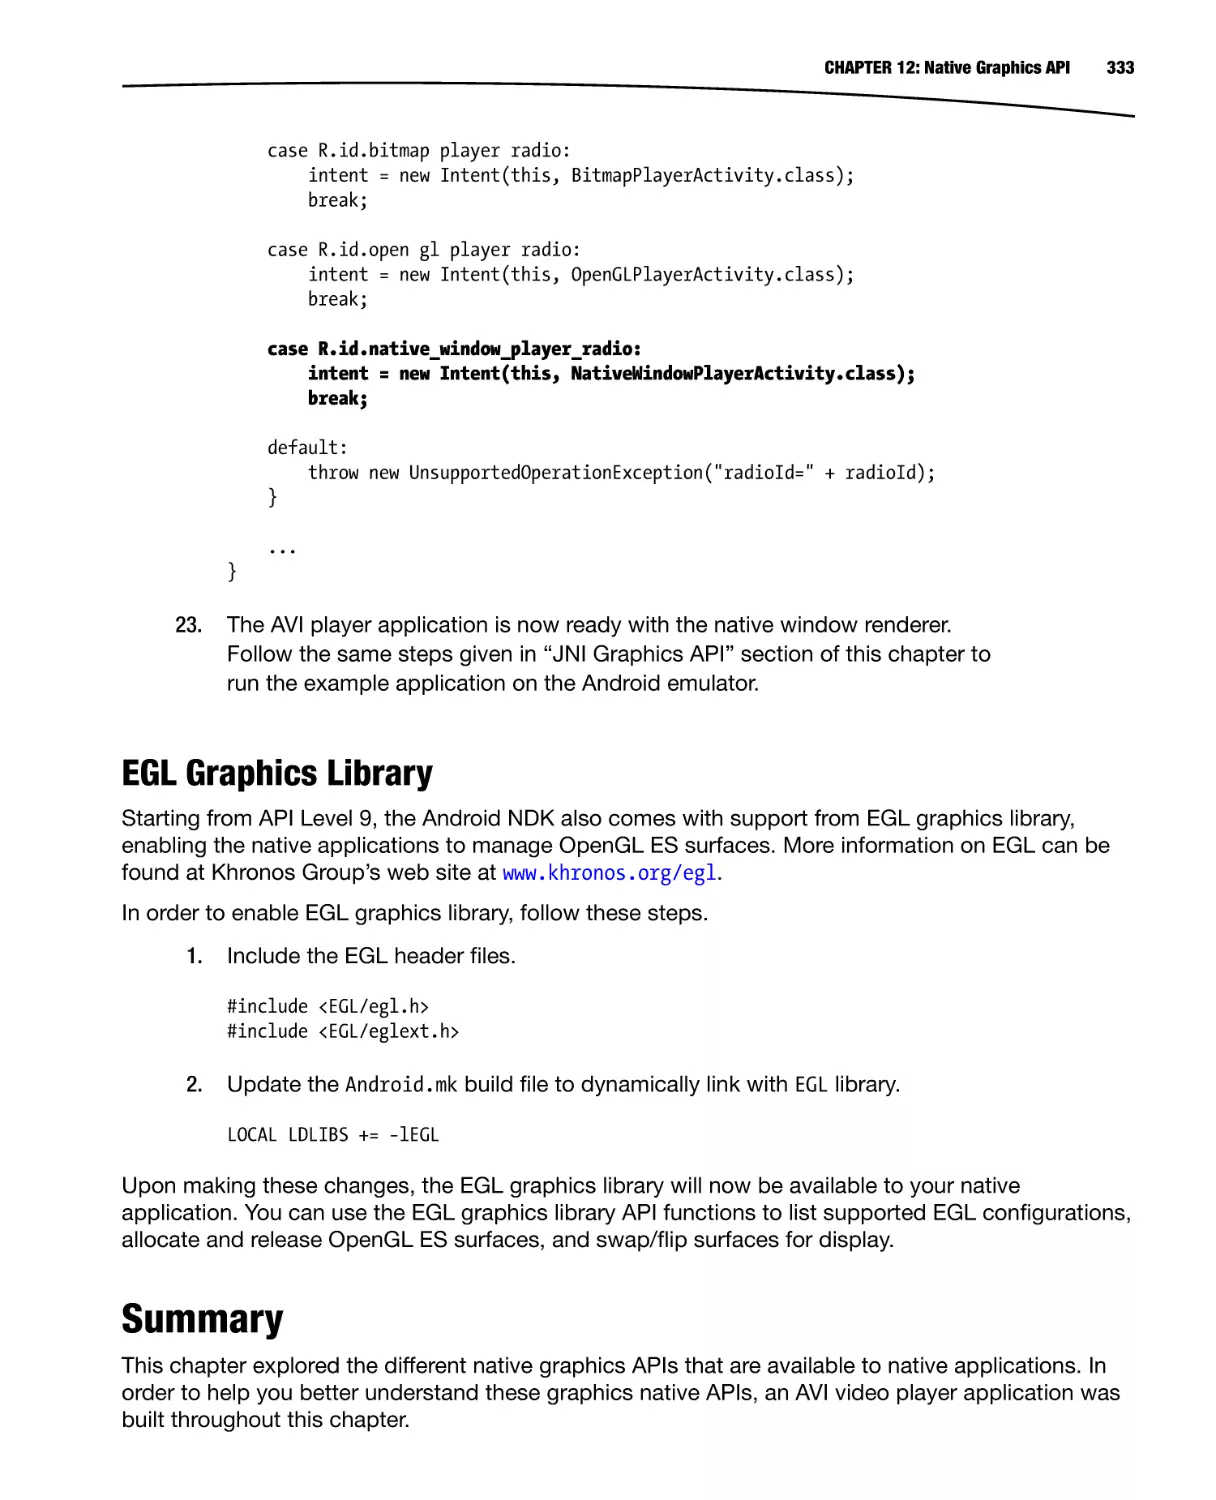 EGL Graphics Library
Summary